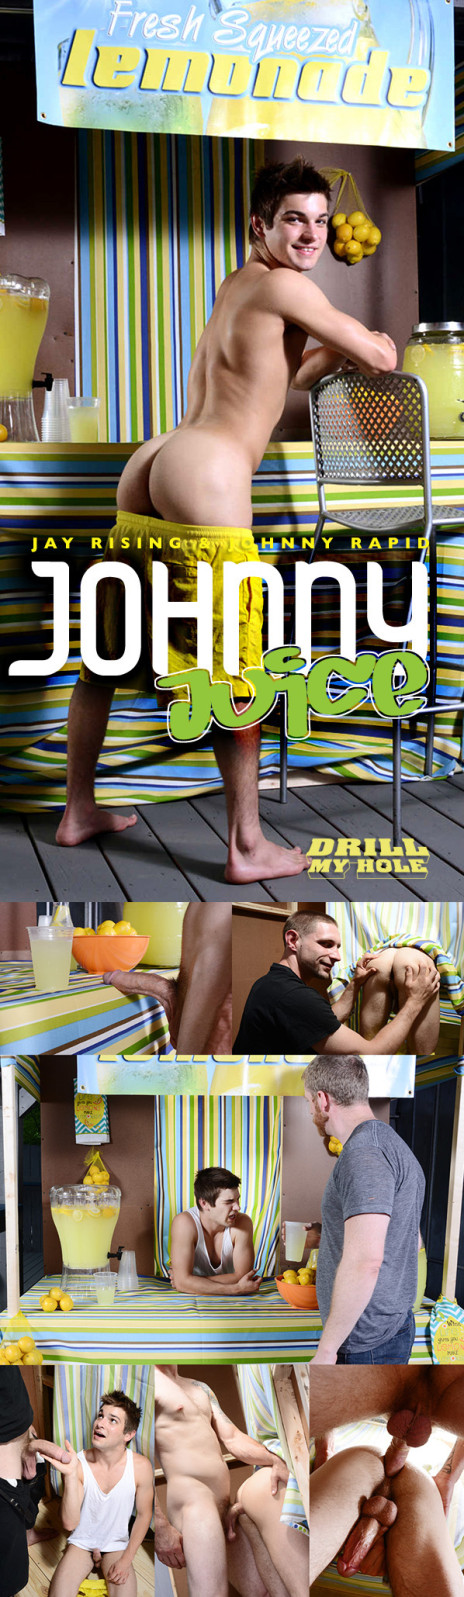 Johnny-Juice-r.jpg